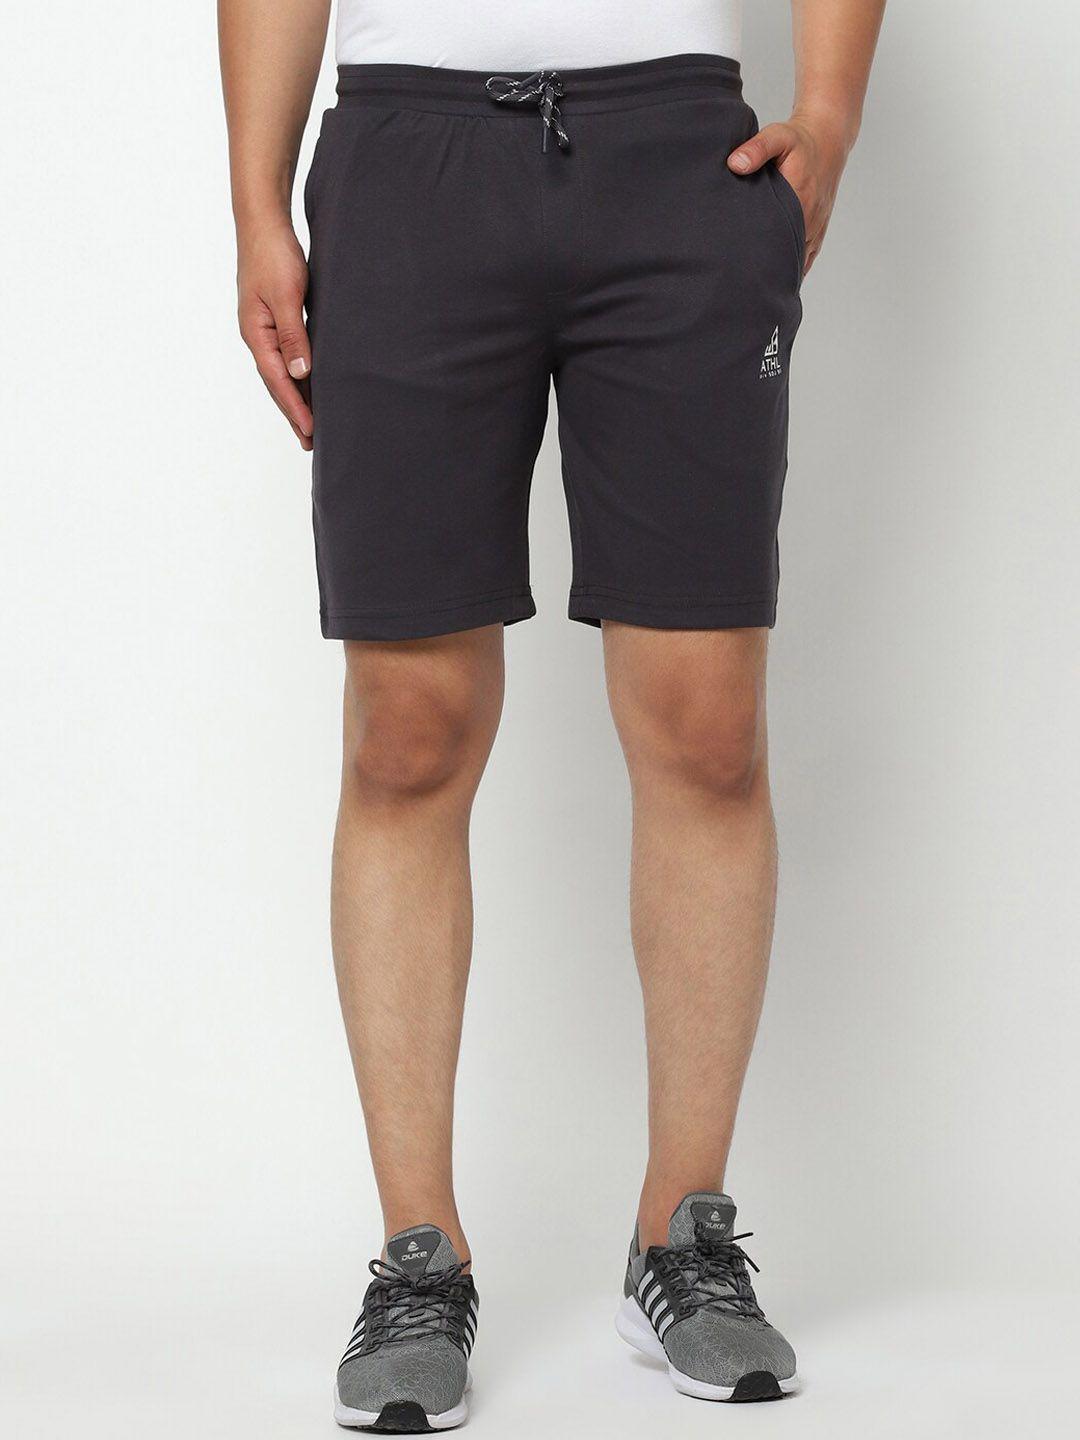 duke-men-outdoor-sports-shorts